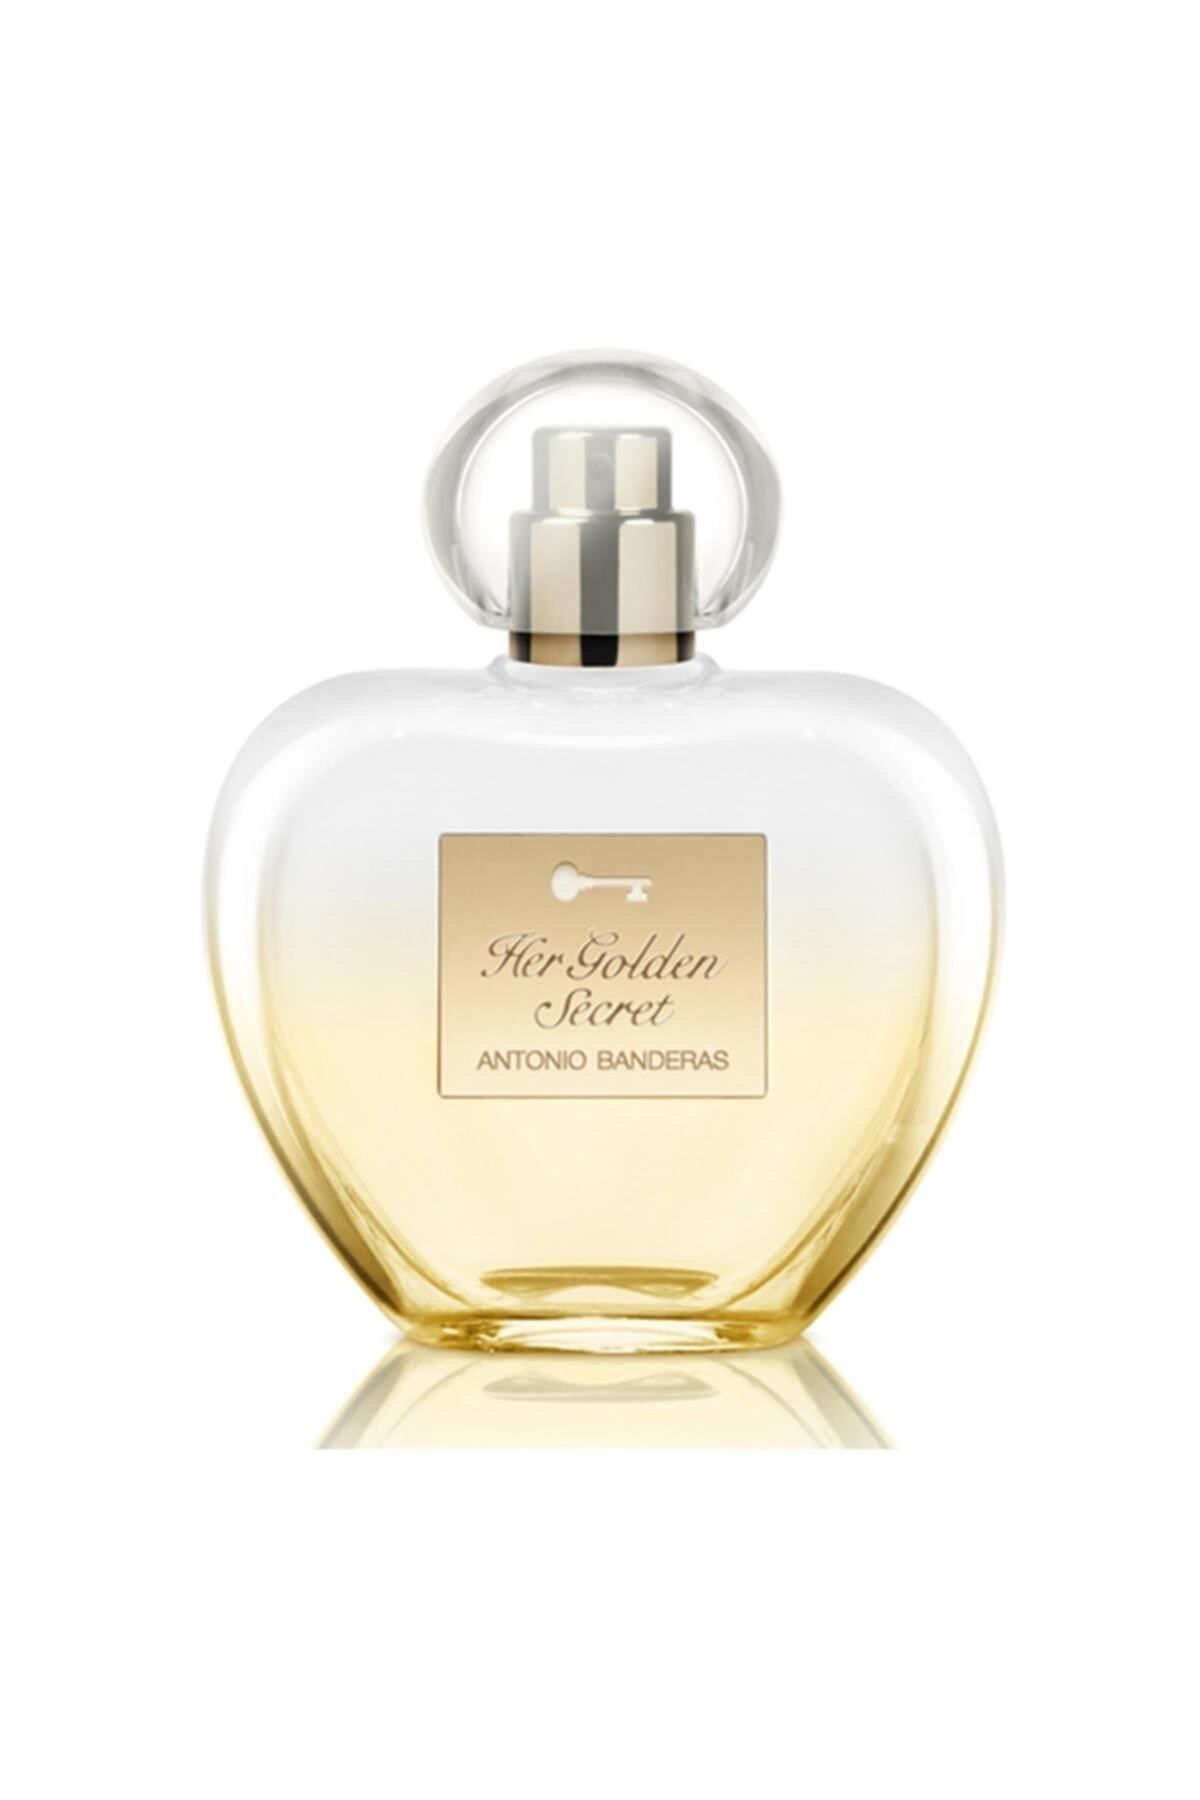 Antonio Banderas UNIQUE AND PERFECT FRAGRANCE Her Golden Secret EDT Women's Perfume 80 Ml DMBA512